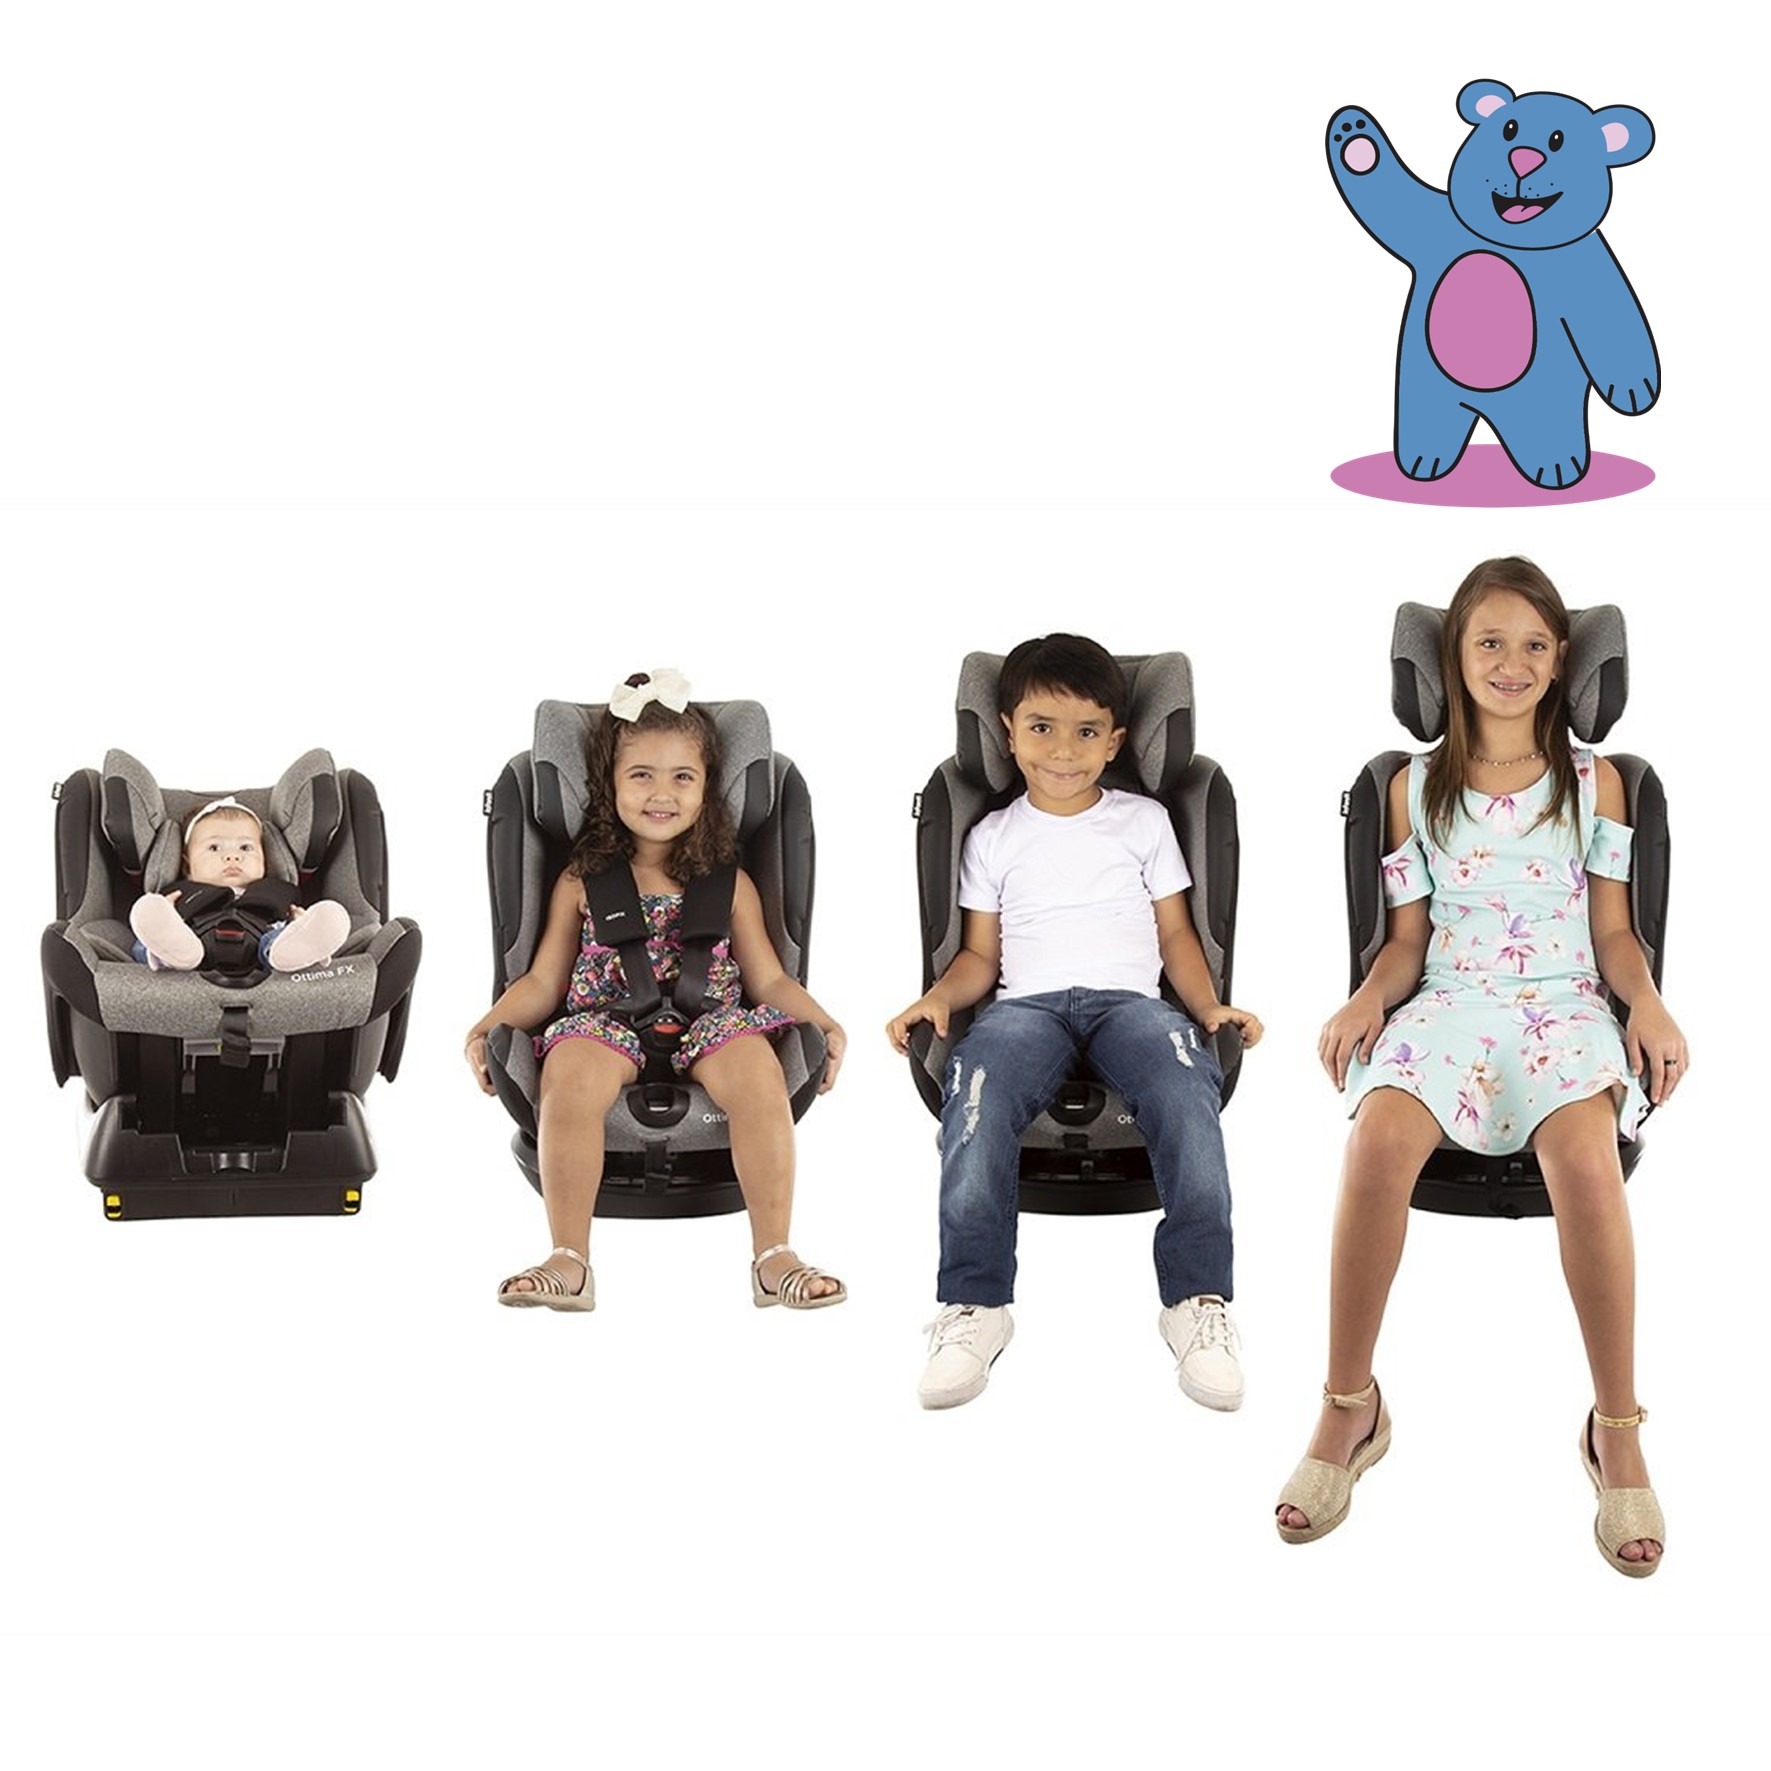 Cadeira Para Auto - 0 a 36 Kg - Ottima FX - Grey Brave - Infanti